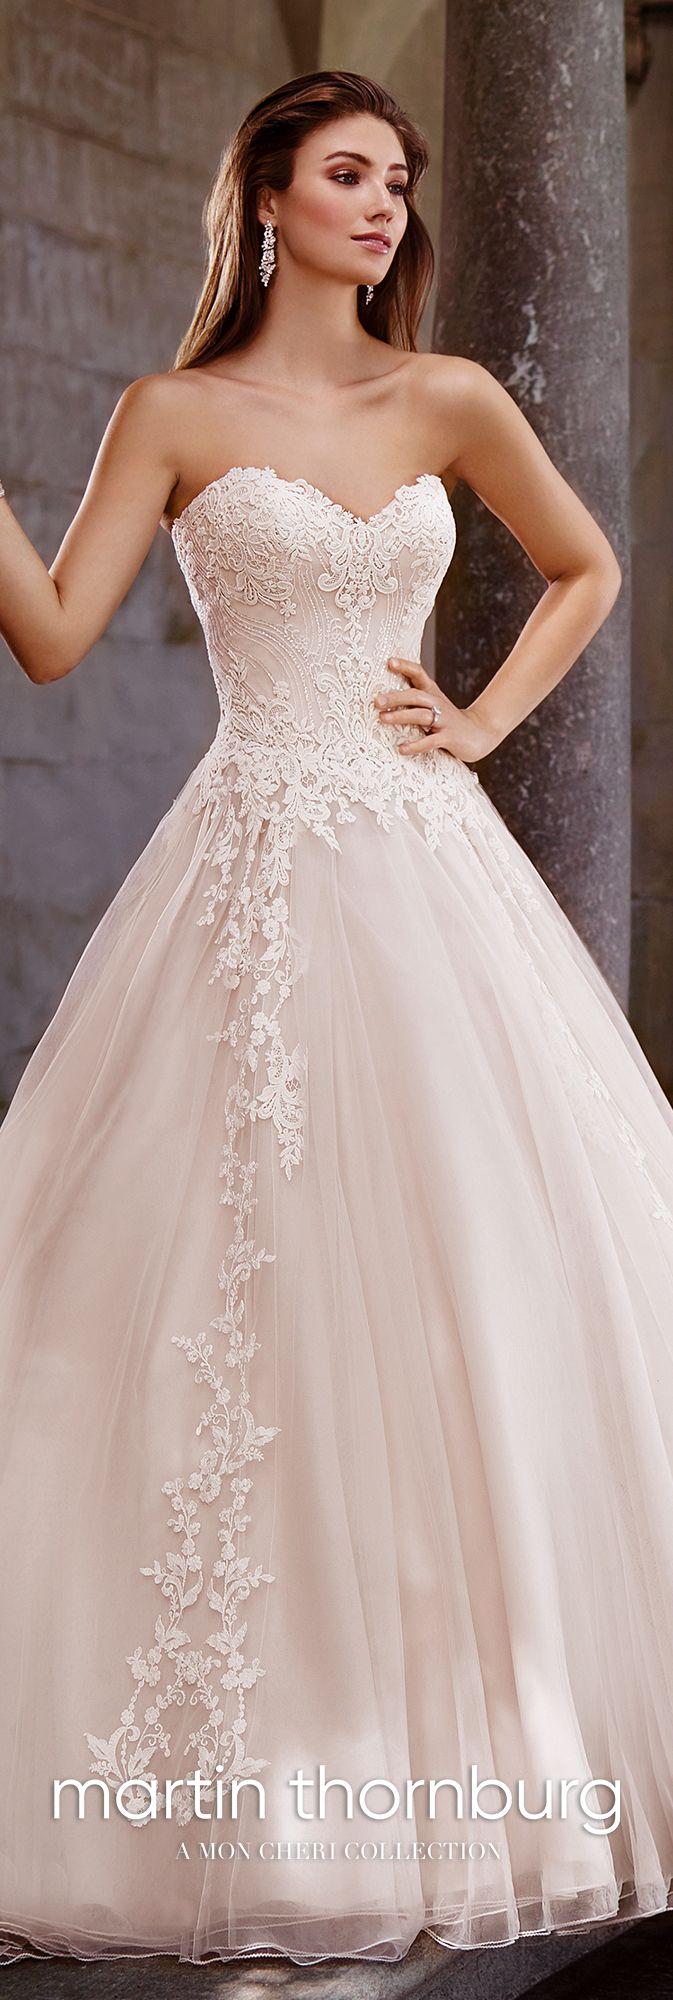 Wedding - Lace A-Line Sweetheart Neckline Wedding Dress- 117267 Topaz